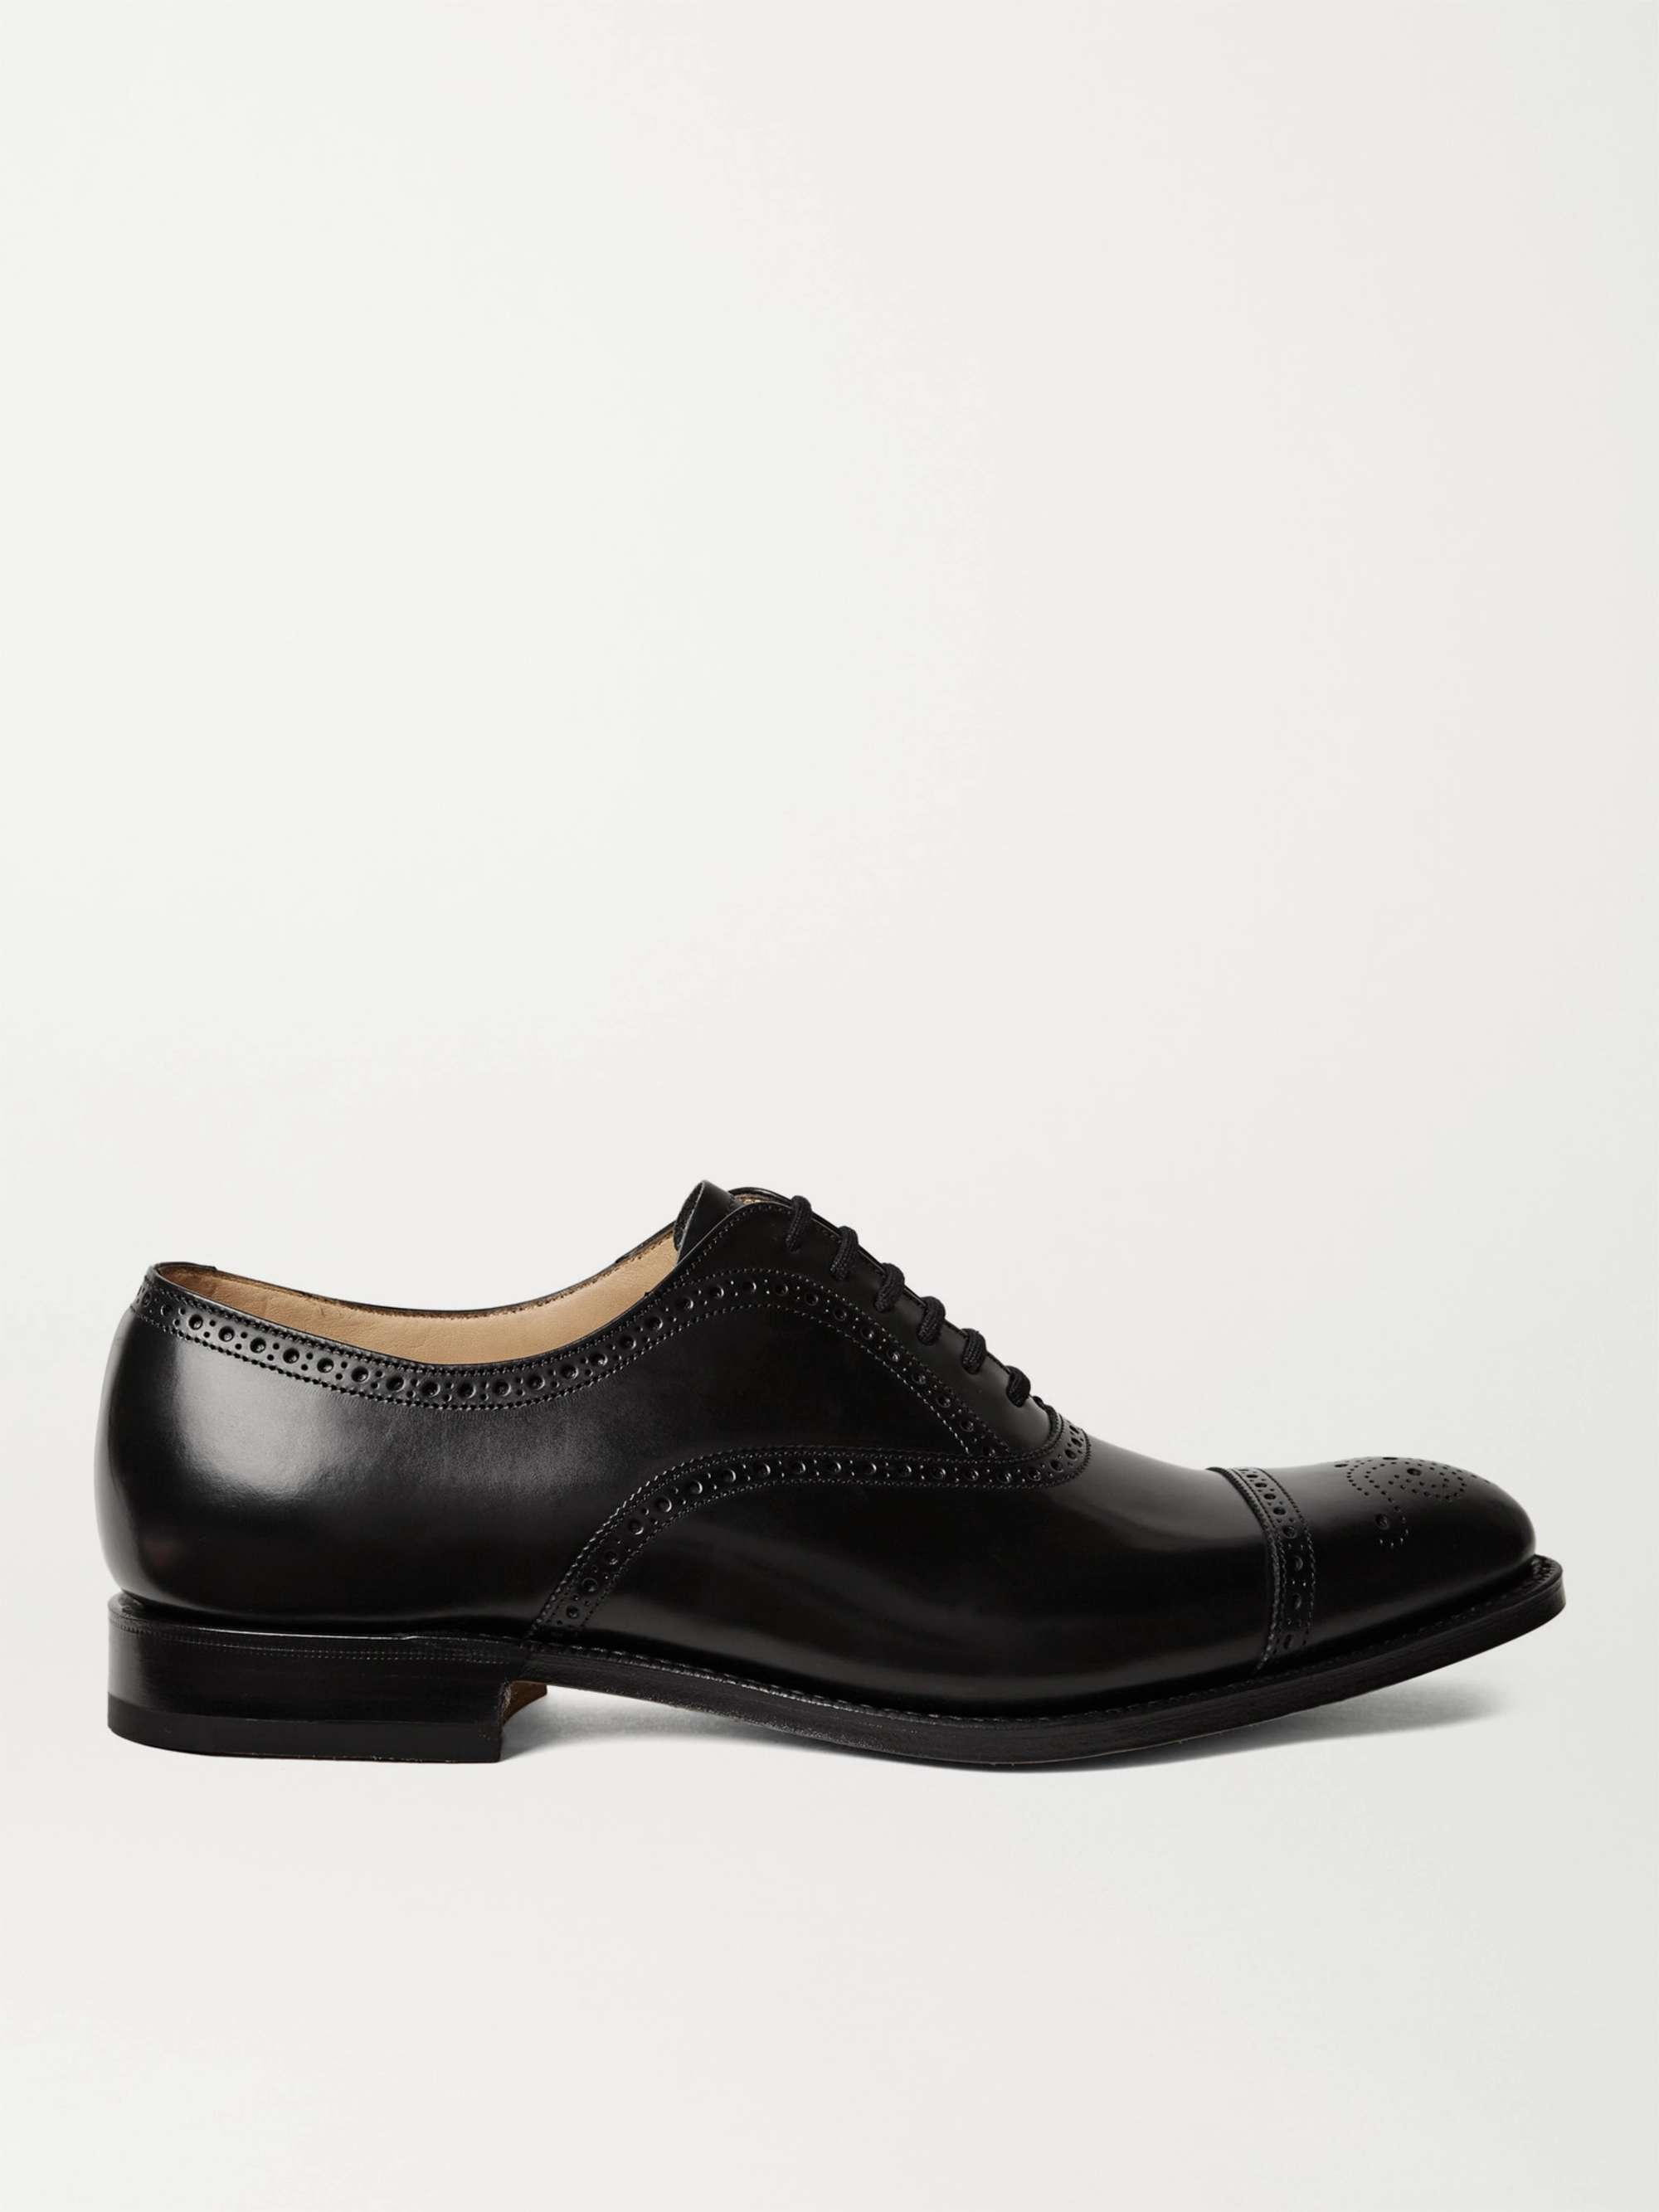 CHURCH'S Toronto Cap-Toe Leather Oxford Brogues for Men | MR PORTER